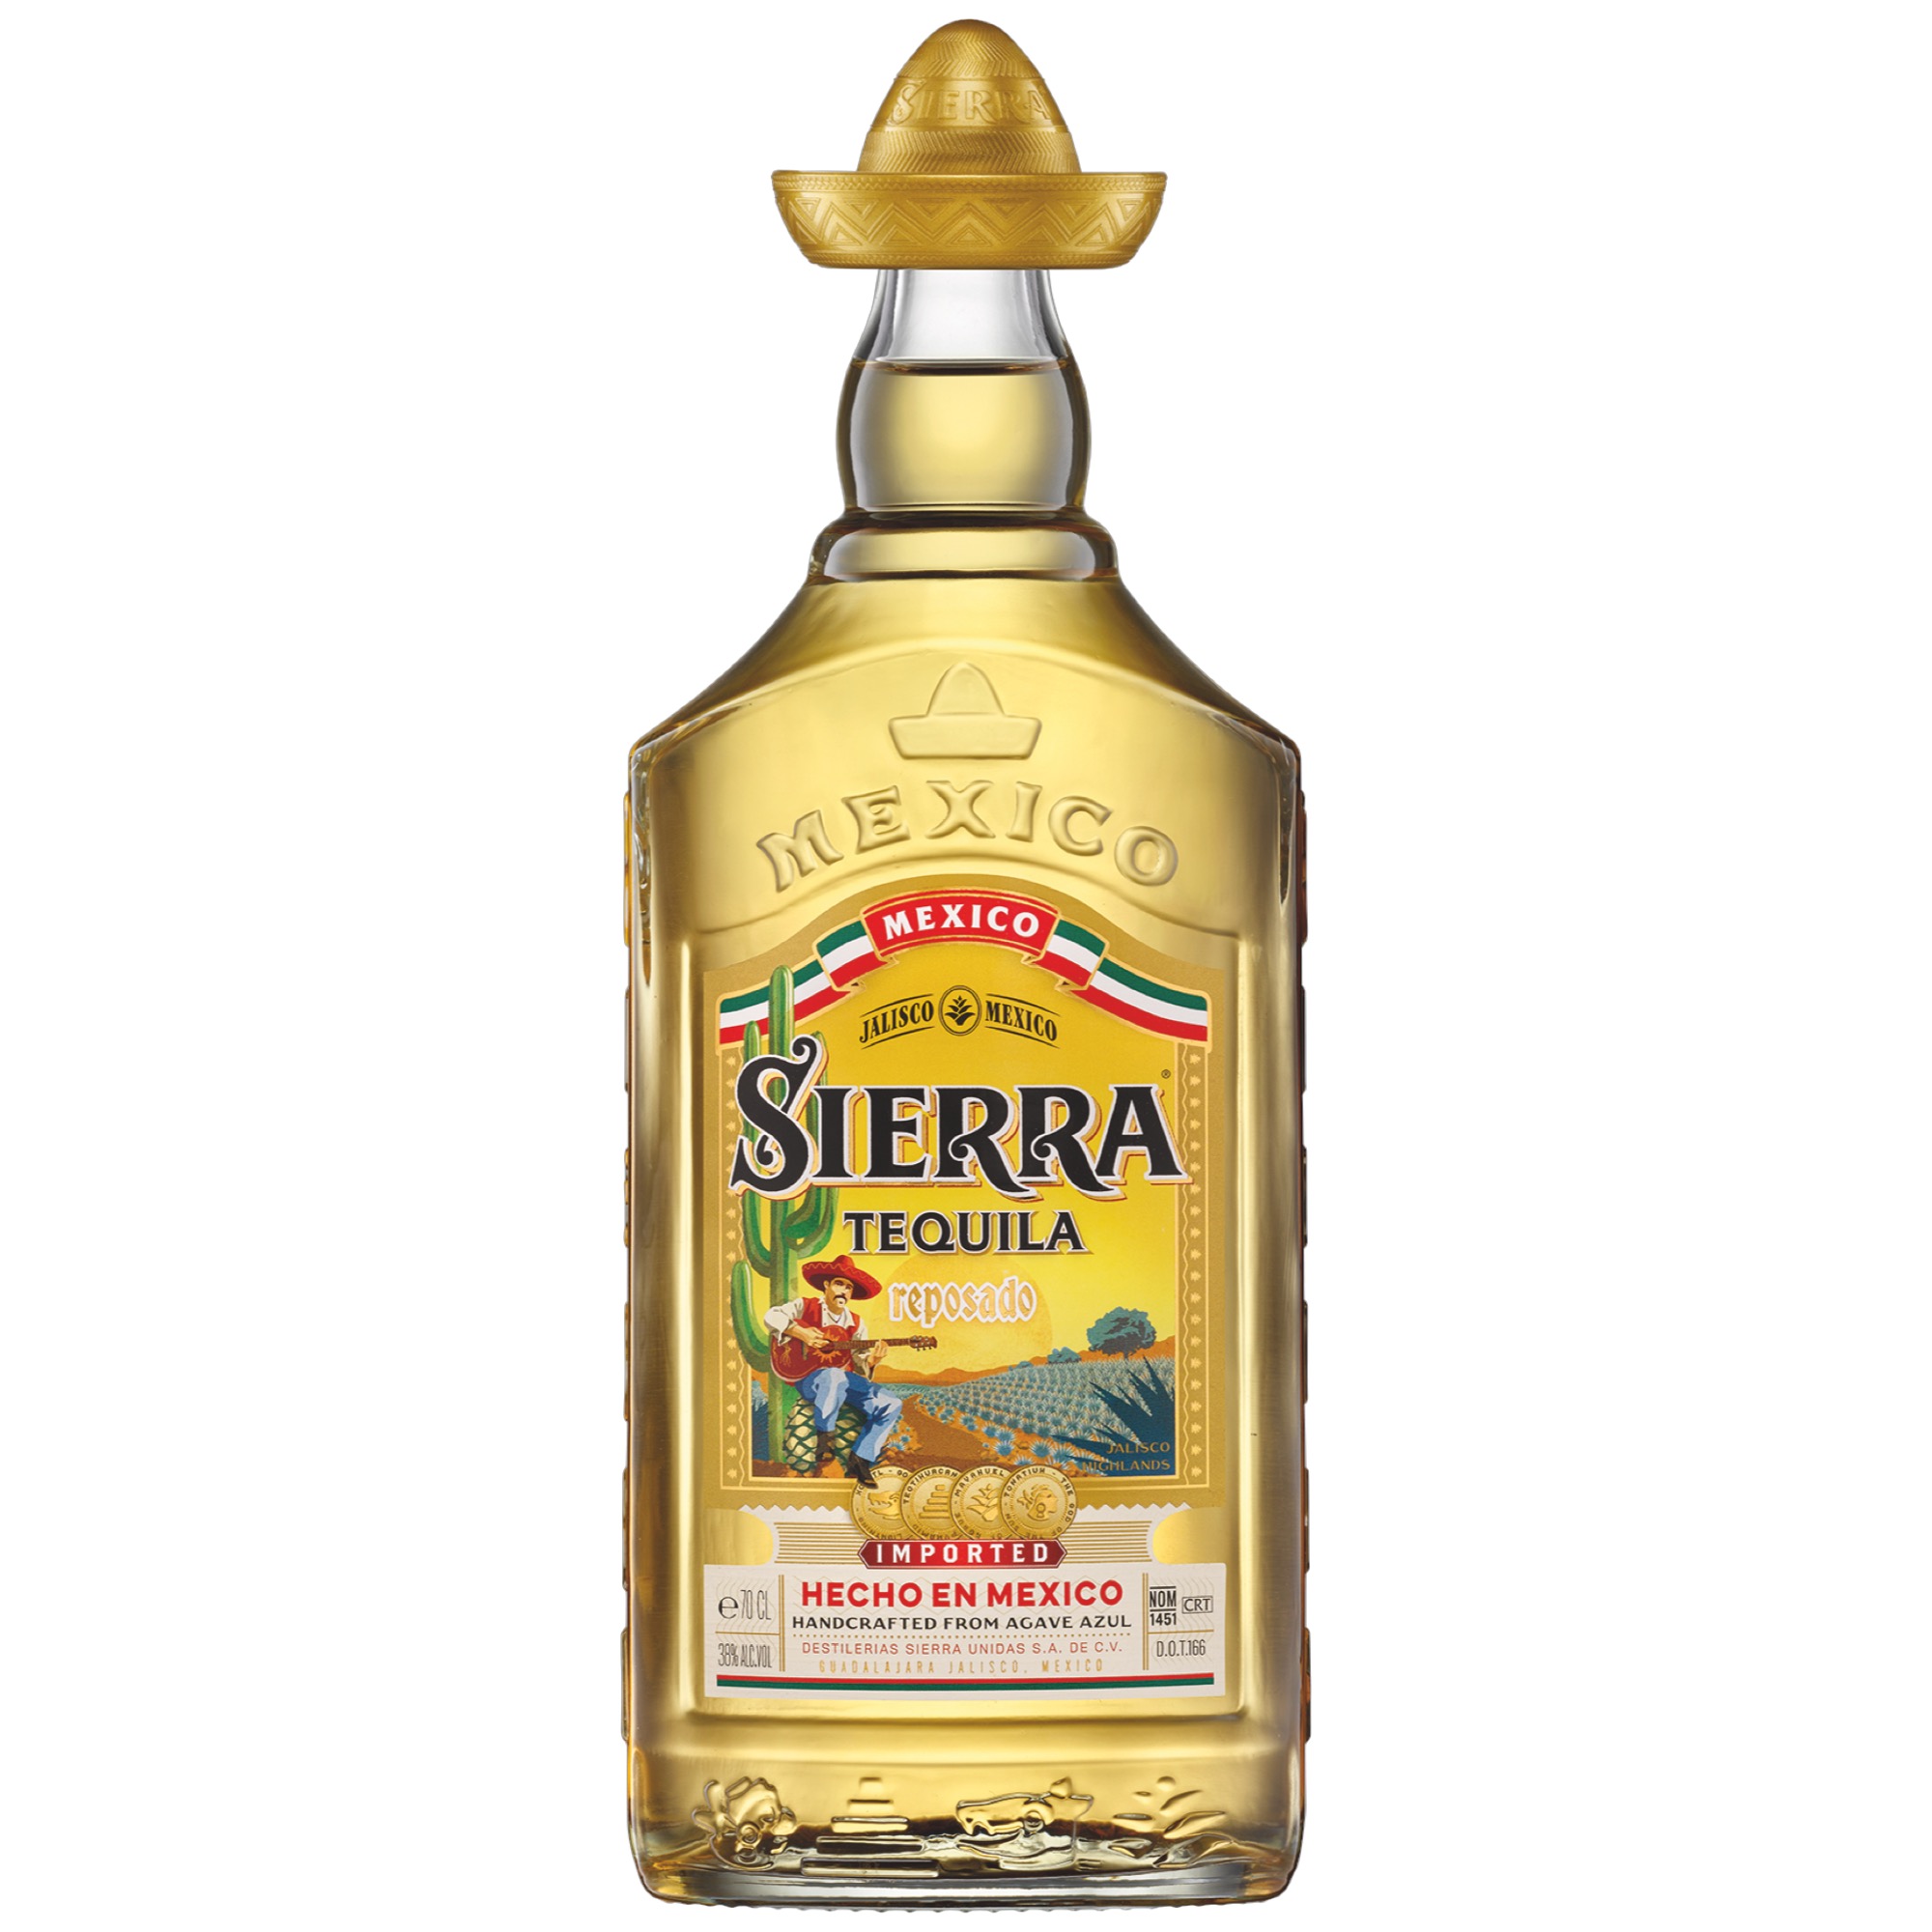 Sierra Tequila 38 %0,7l, Reposado